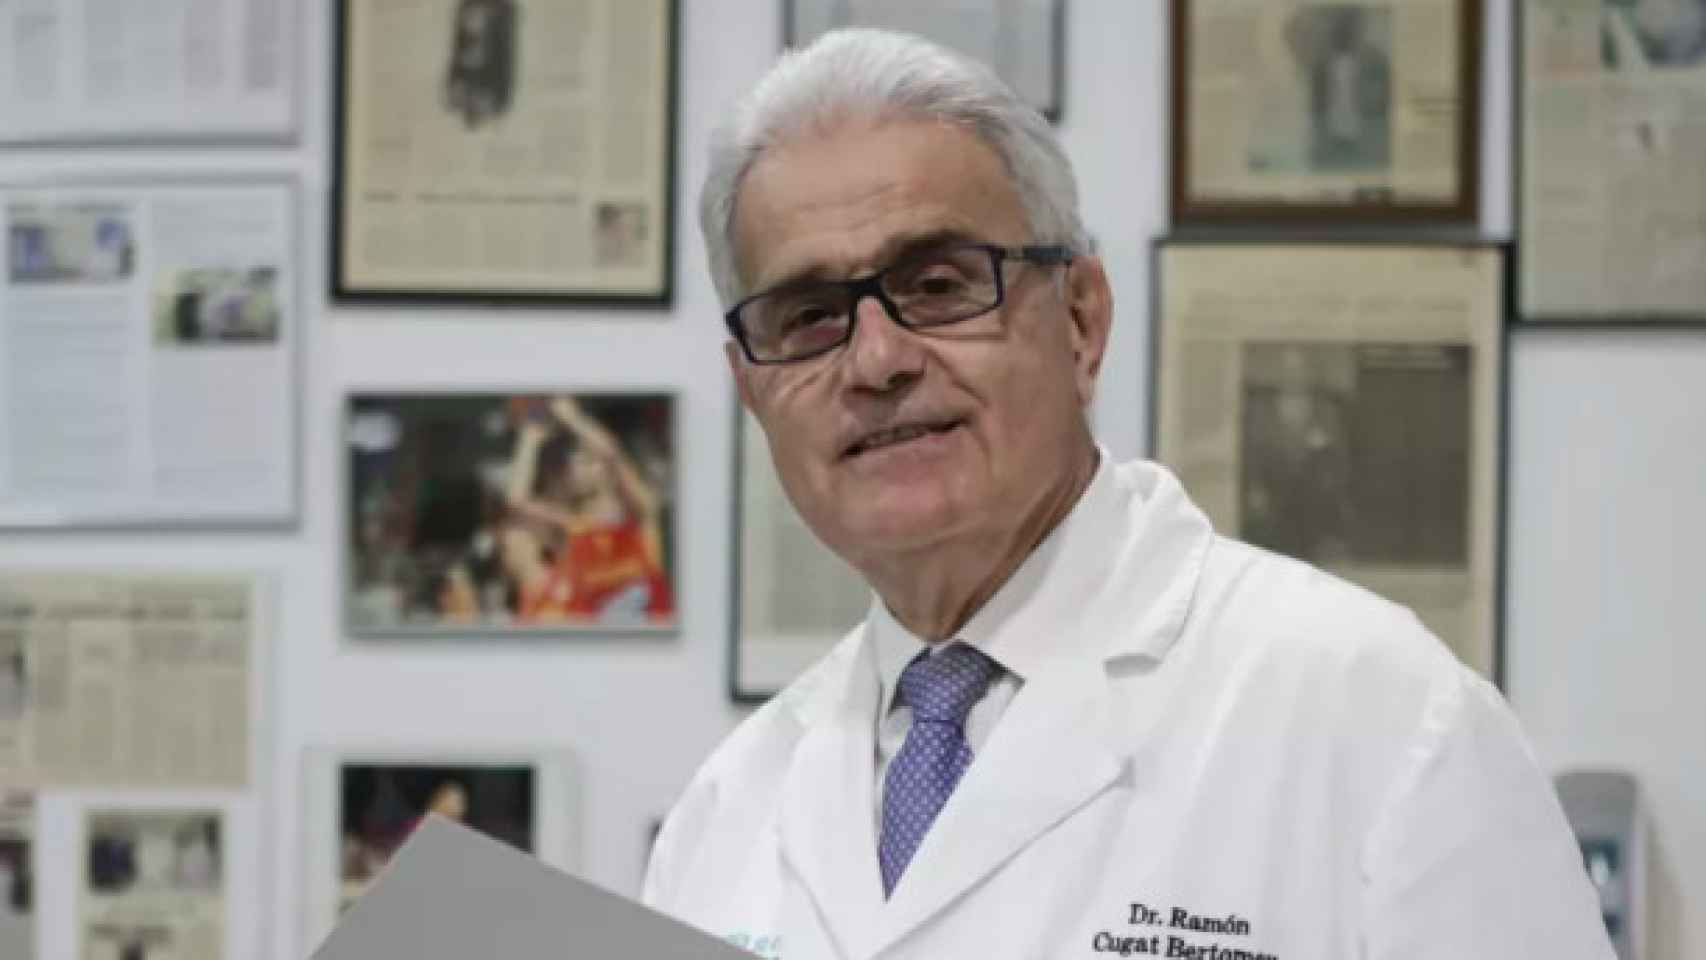 El doctor Ramon Cugat